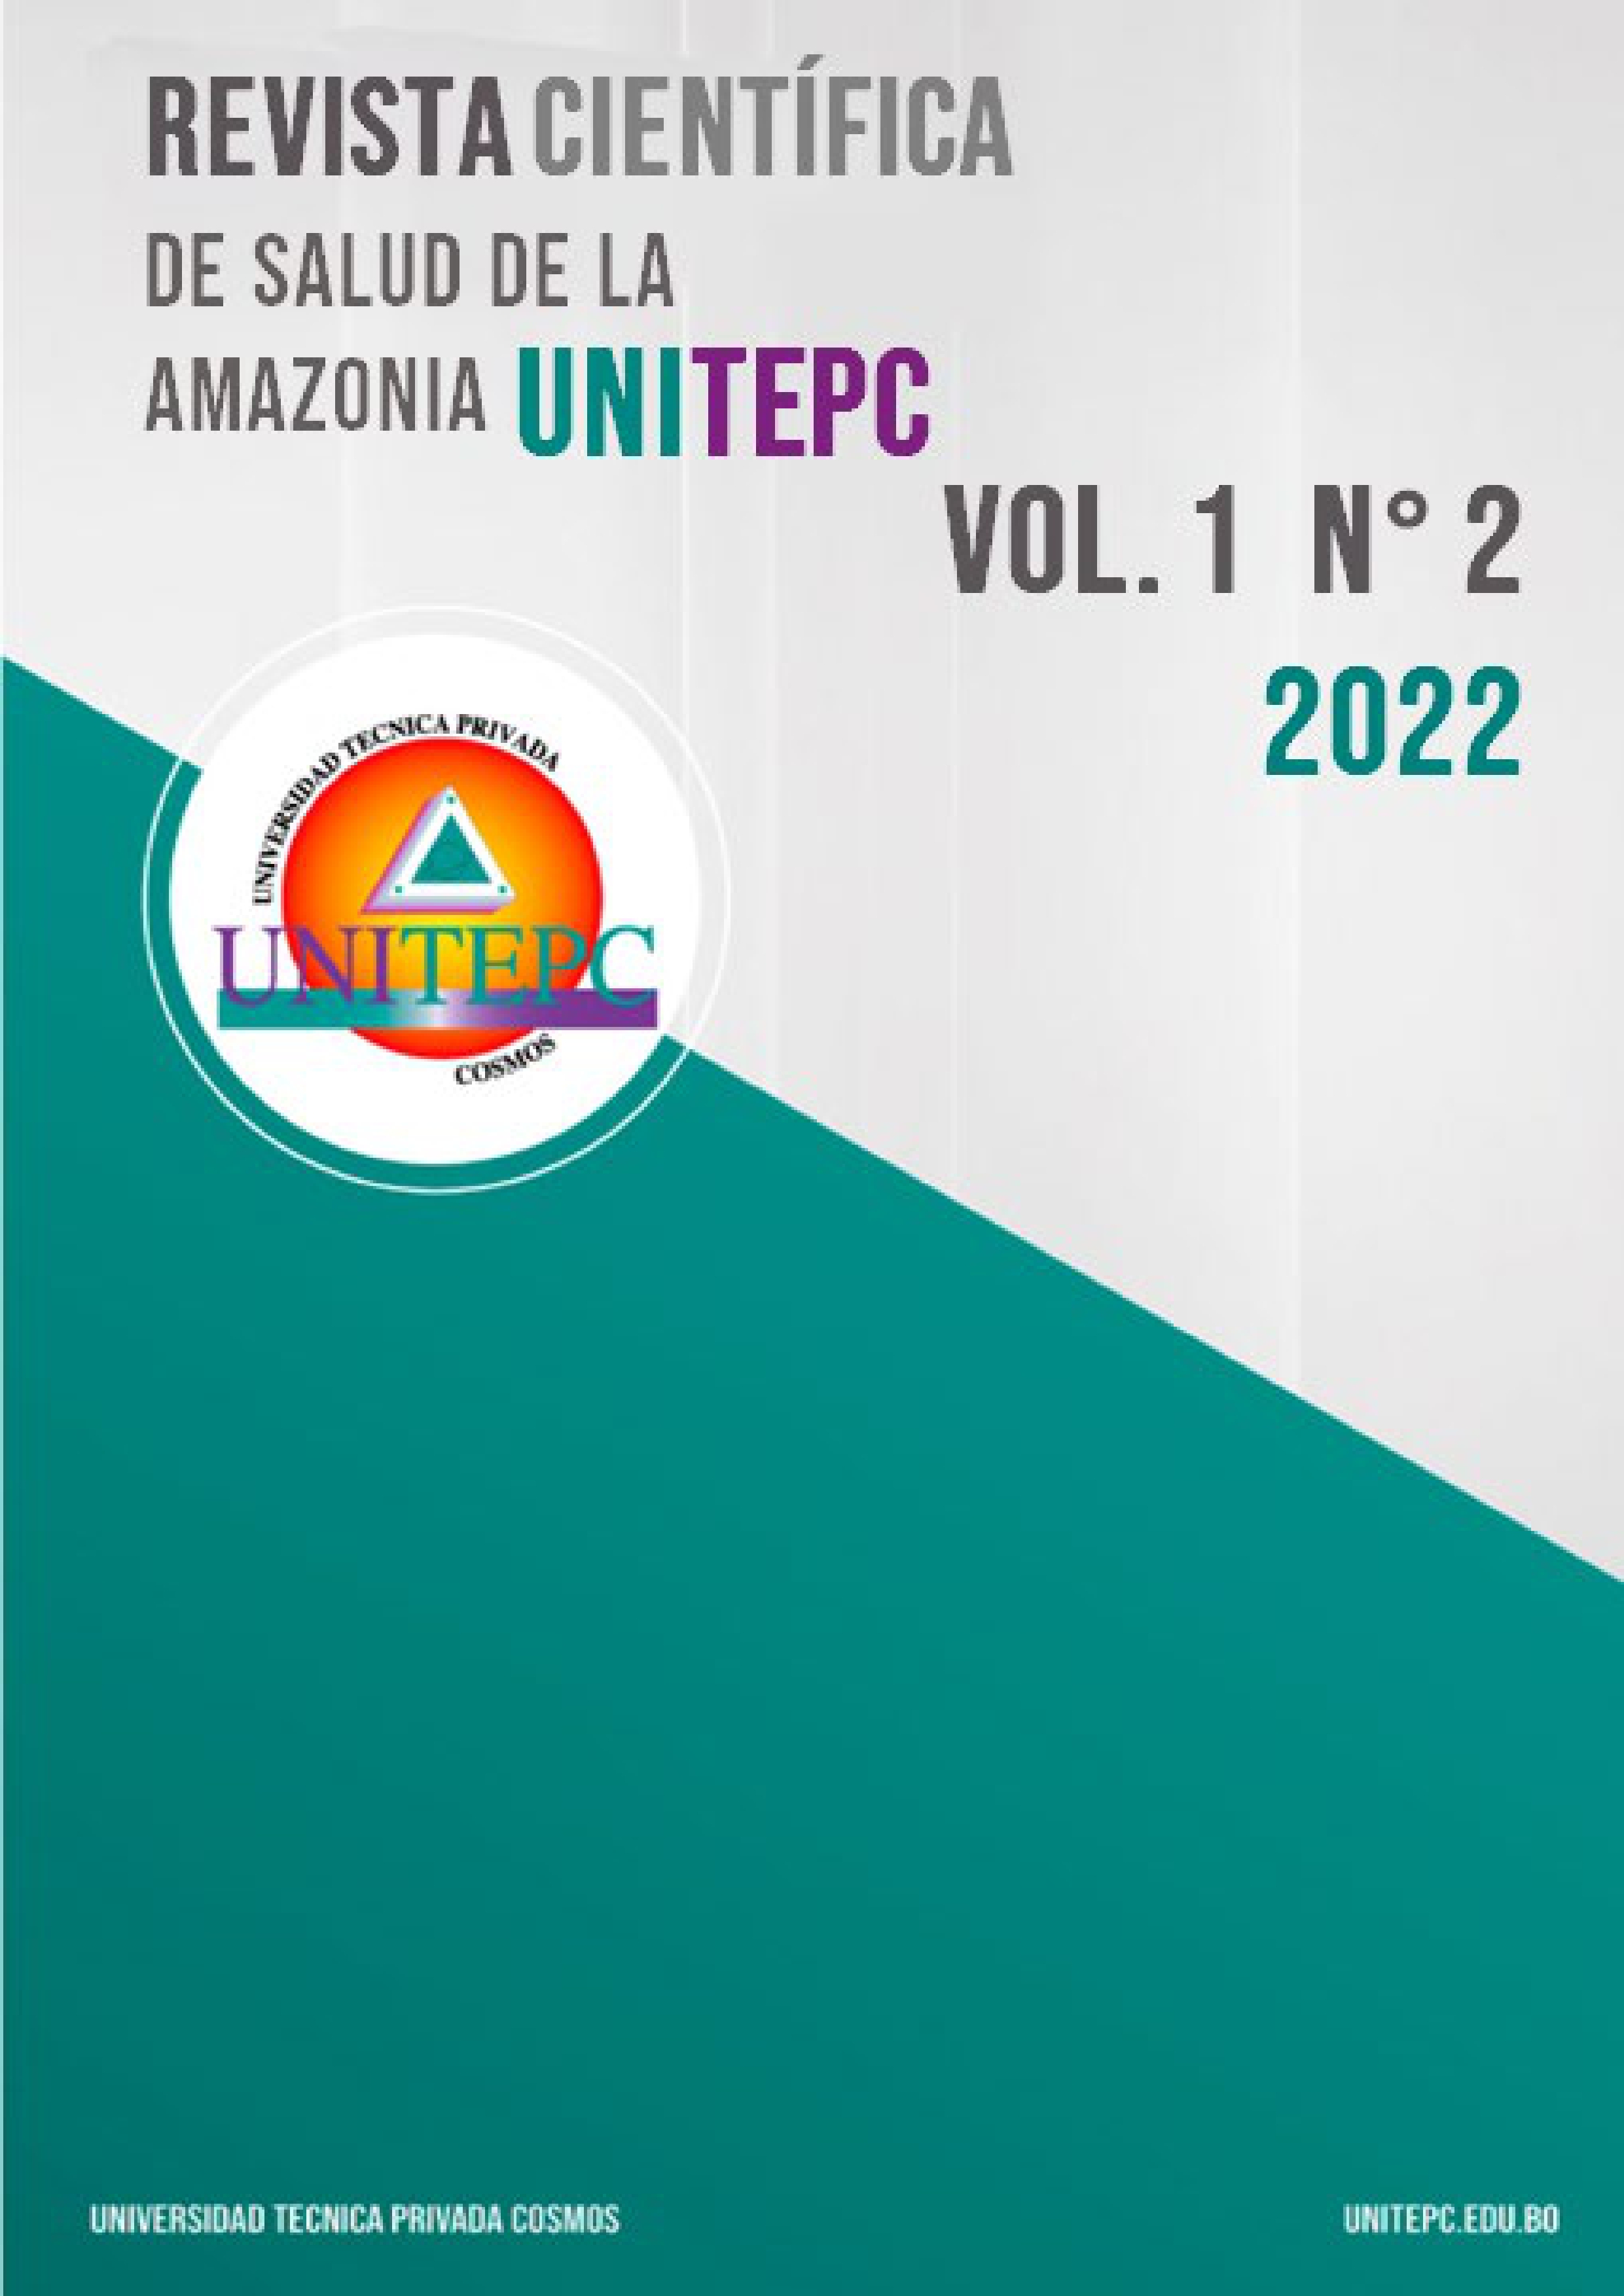 					Ver Vol. 1 Núm. 2 (2022): Revista Científica de Salud de la Amazonia UNITEPC
				